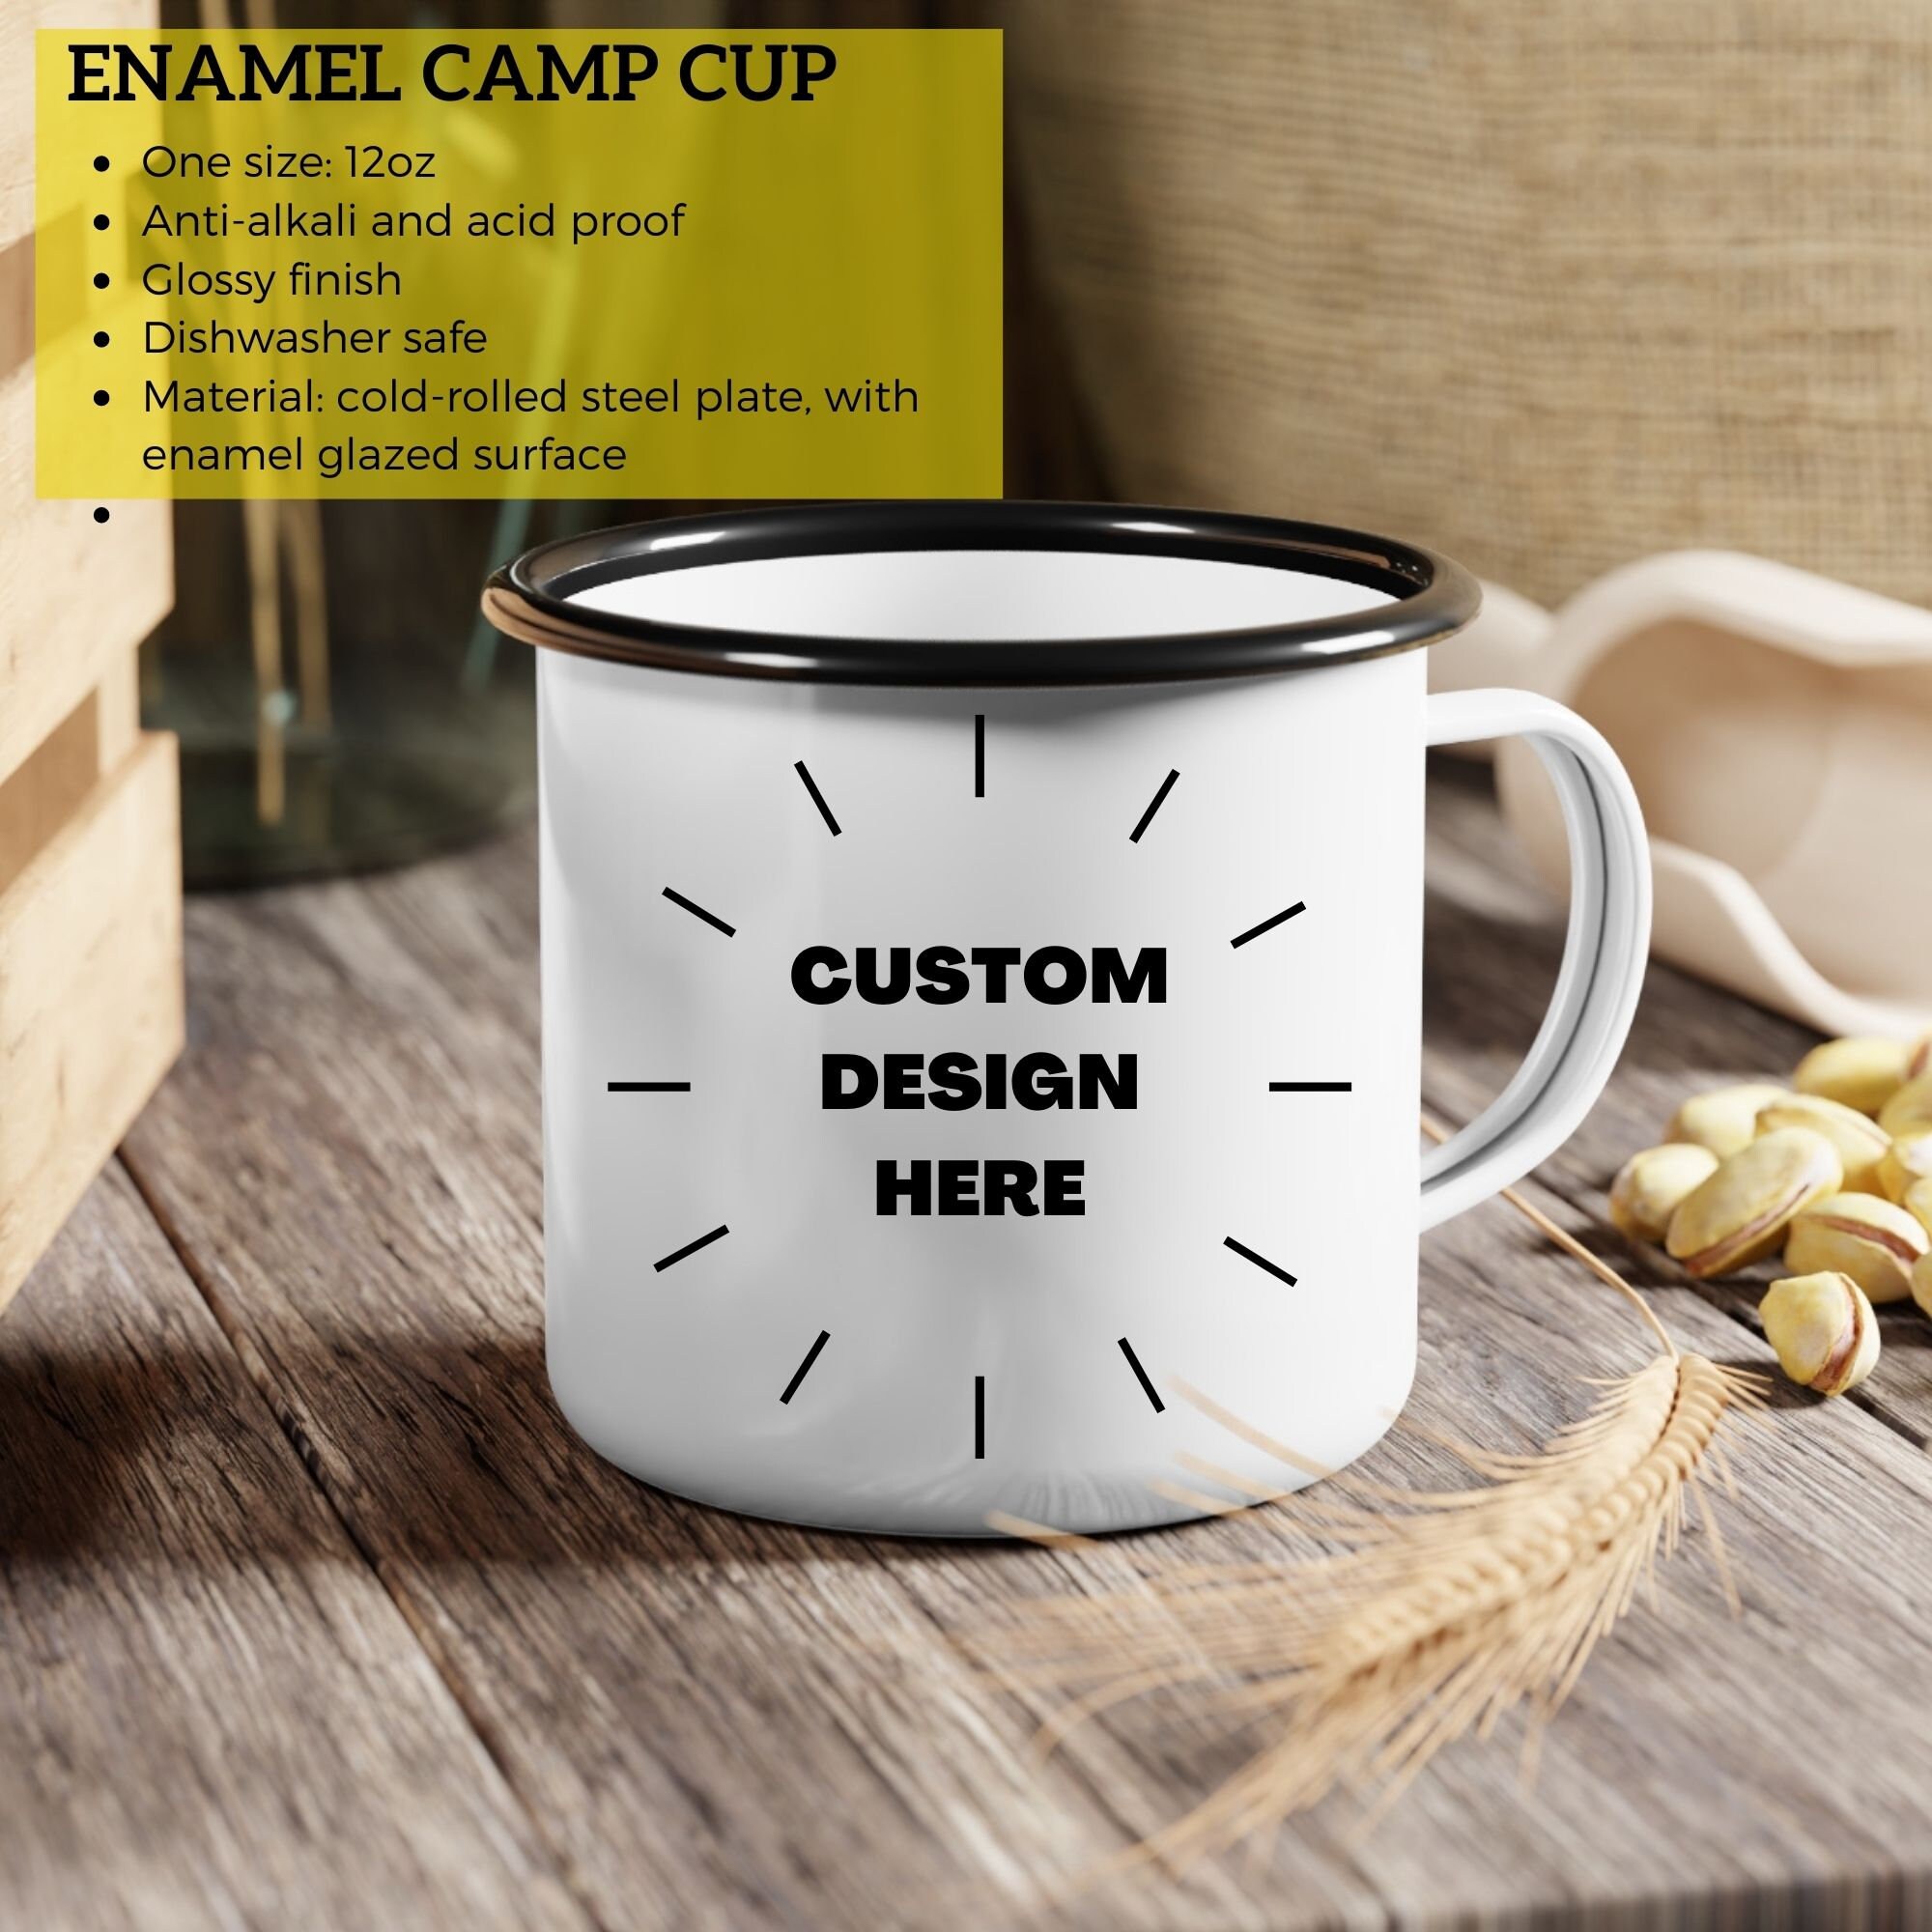 IB Insulated Coffee Mug